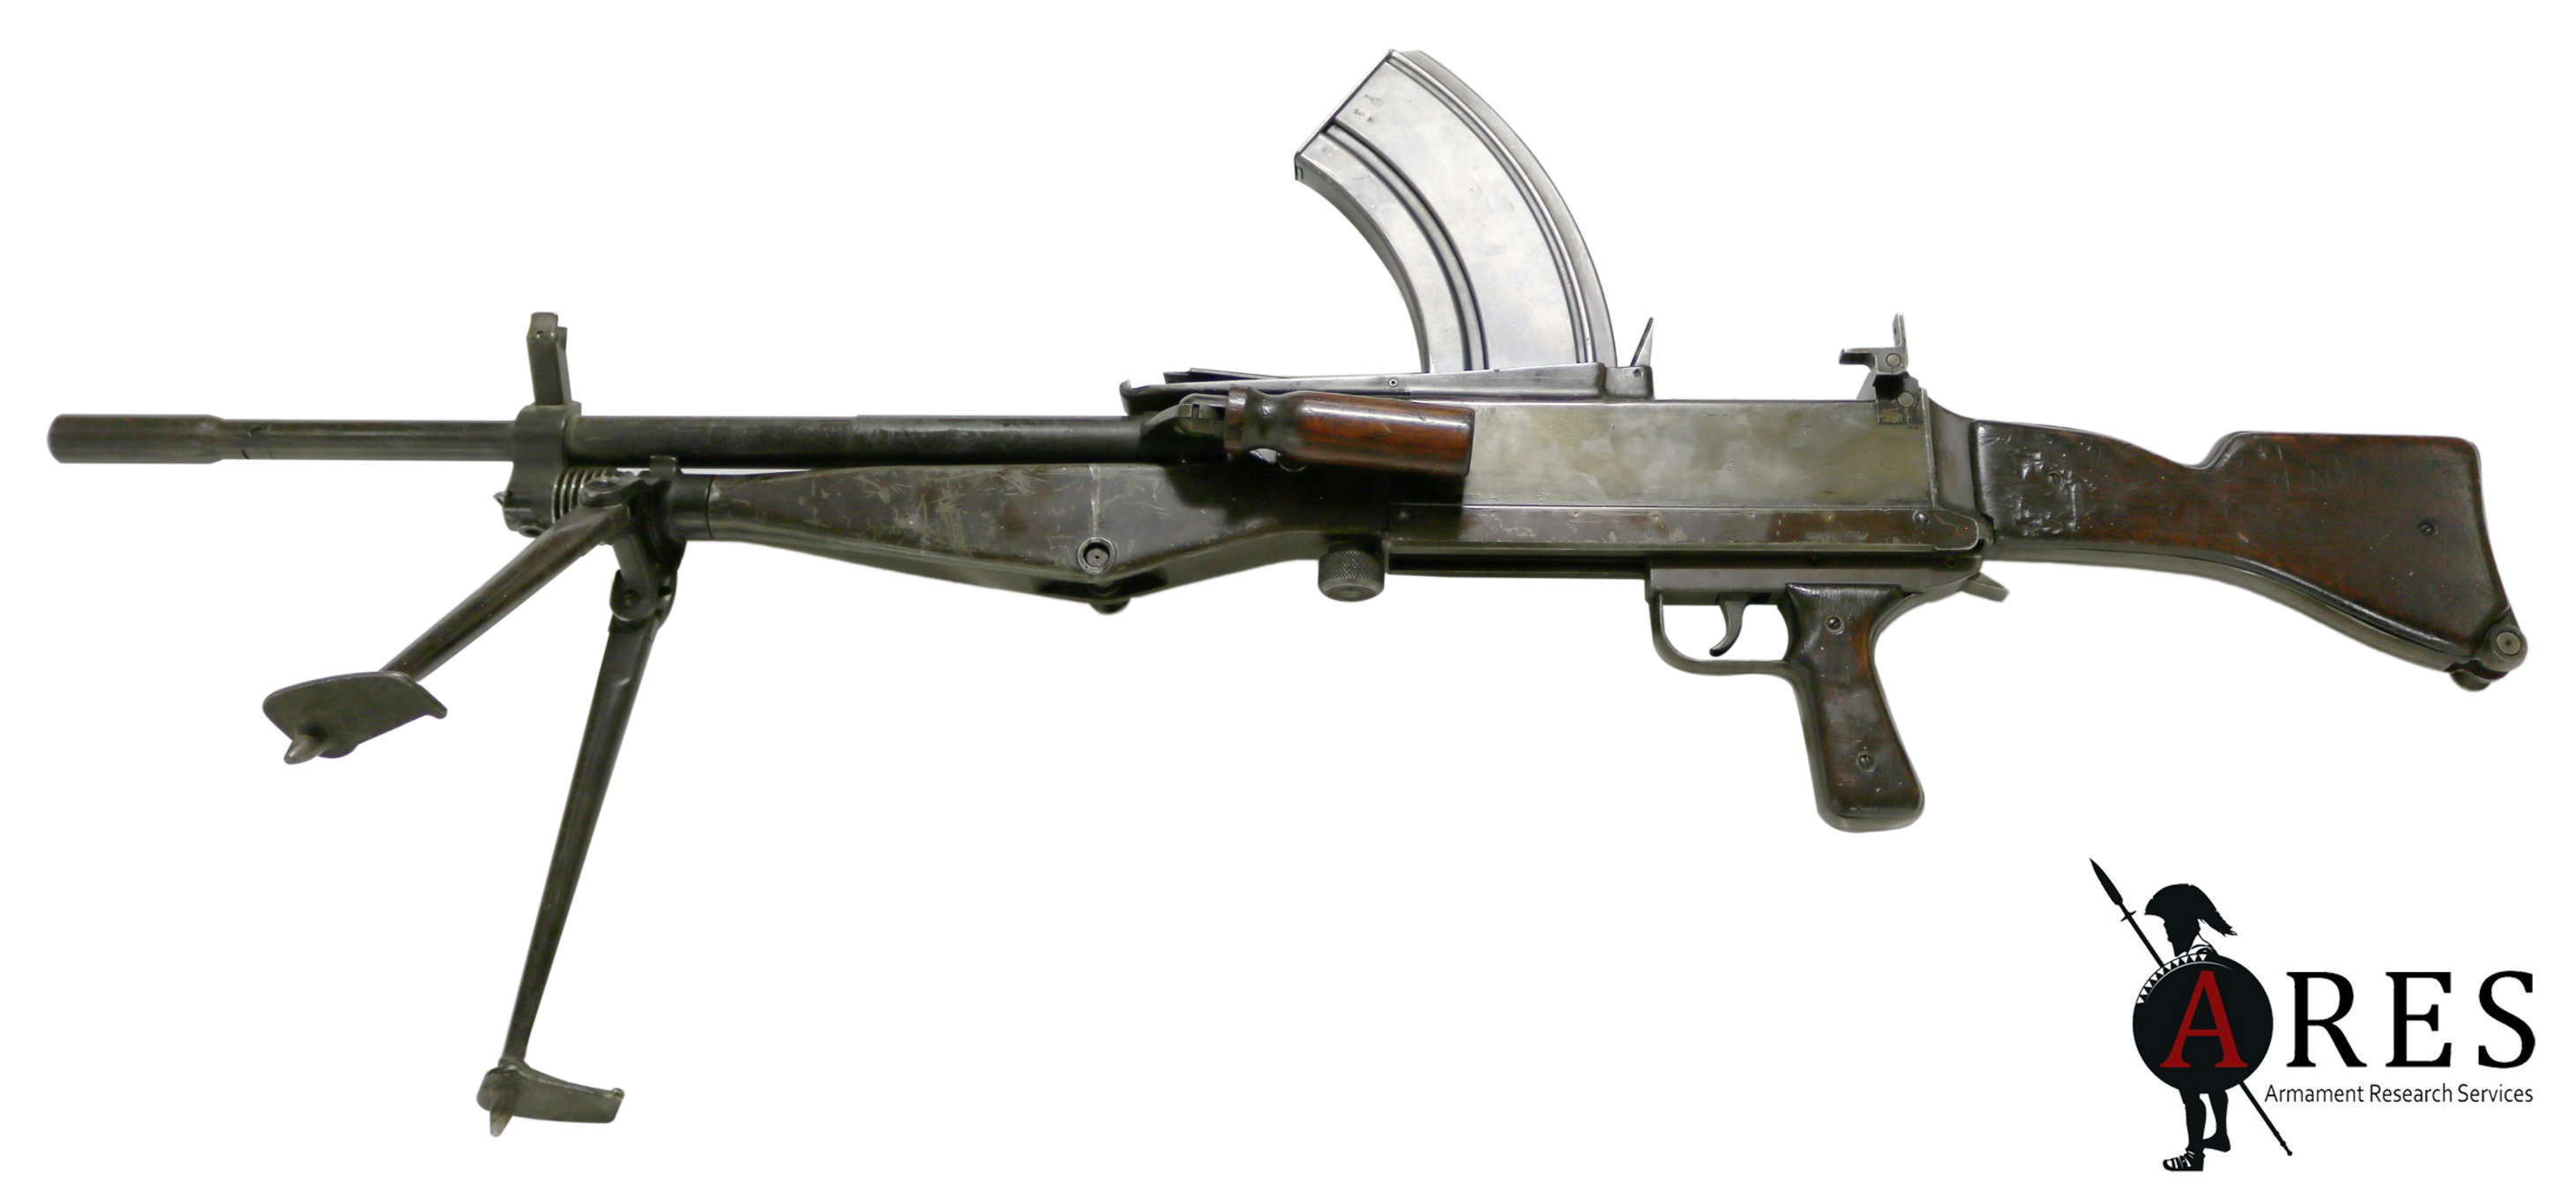 Besal Light Machine Gun Design .999 Fine Silver Bar 1g One Gram 